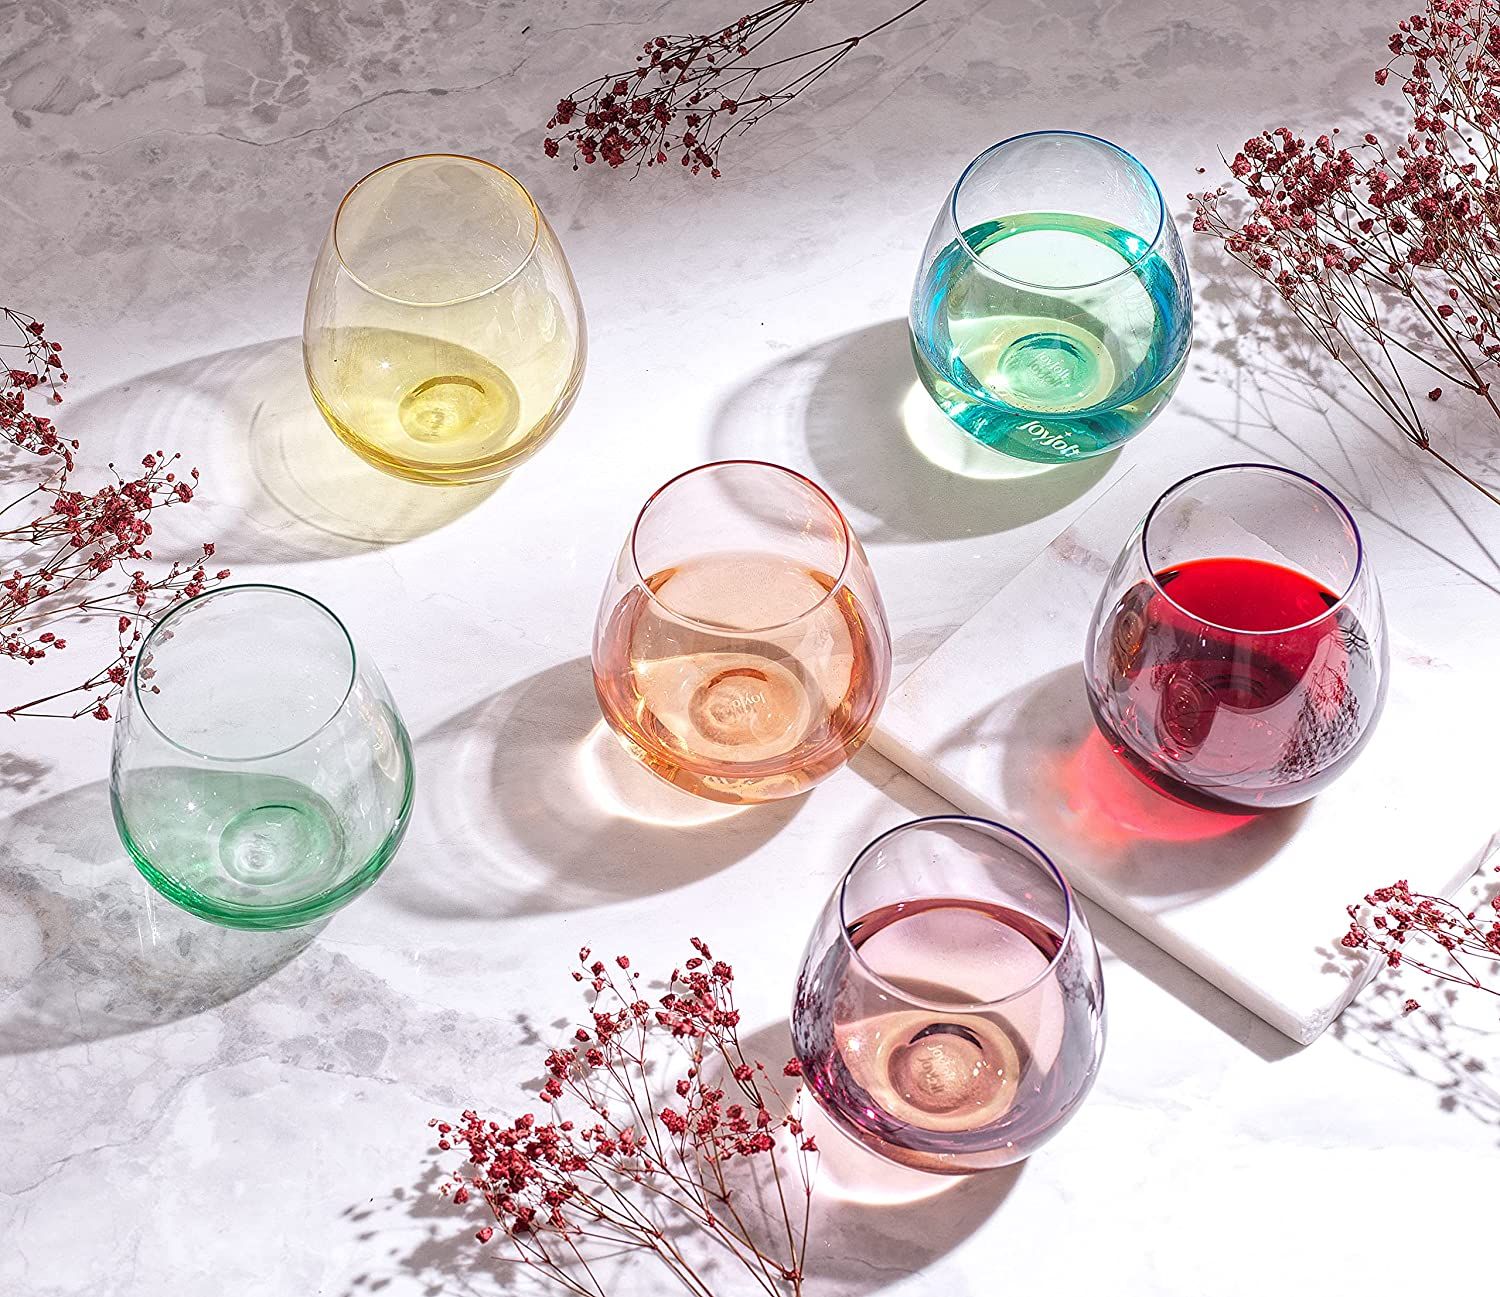 Neiman Marcus Cut Stemless Wine Glasses, Set of 4